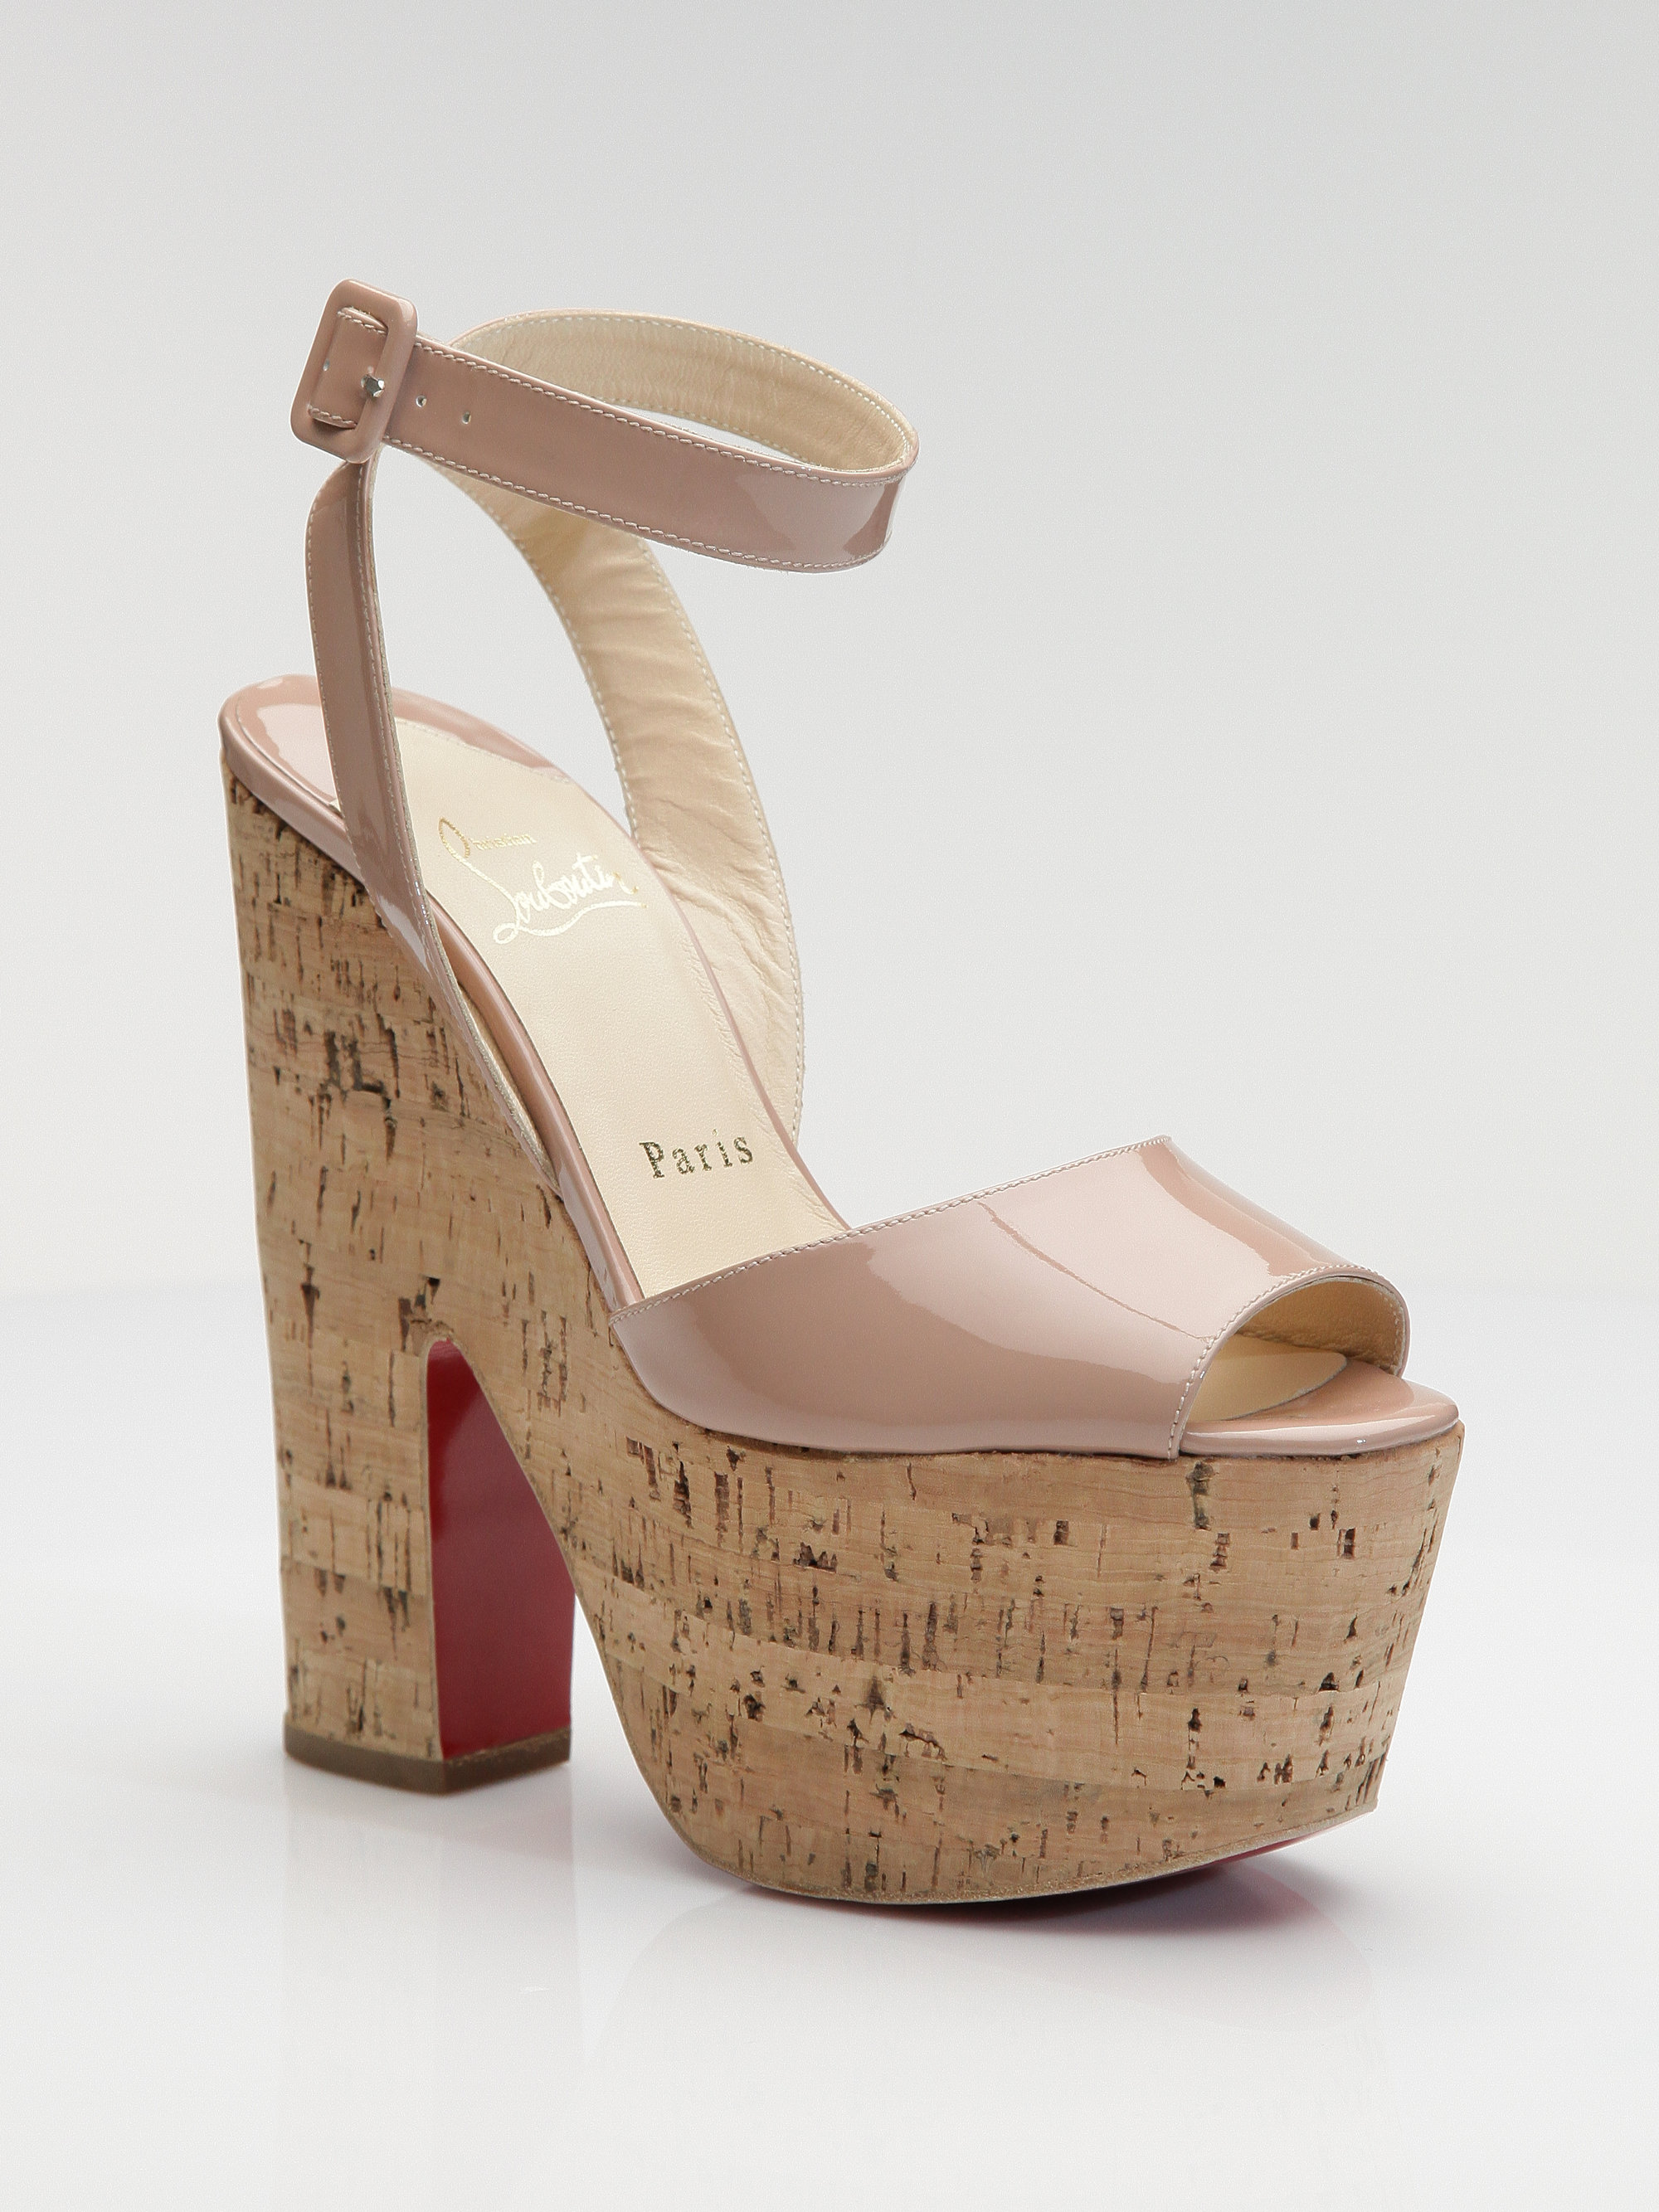 christian louboutin patent leather platform sandals | The Little ...